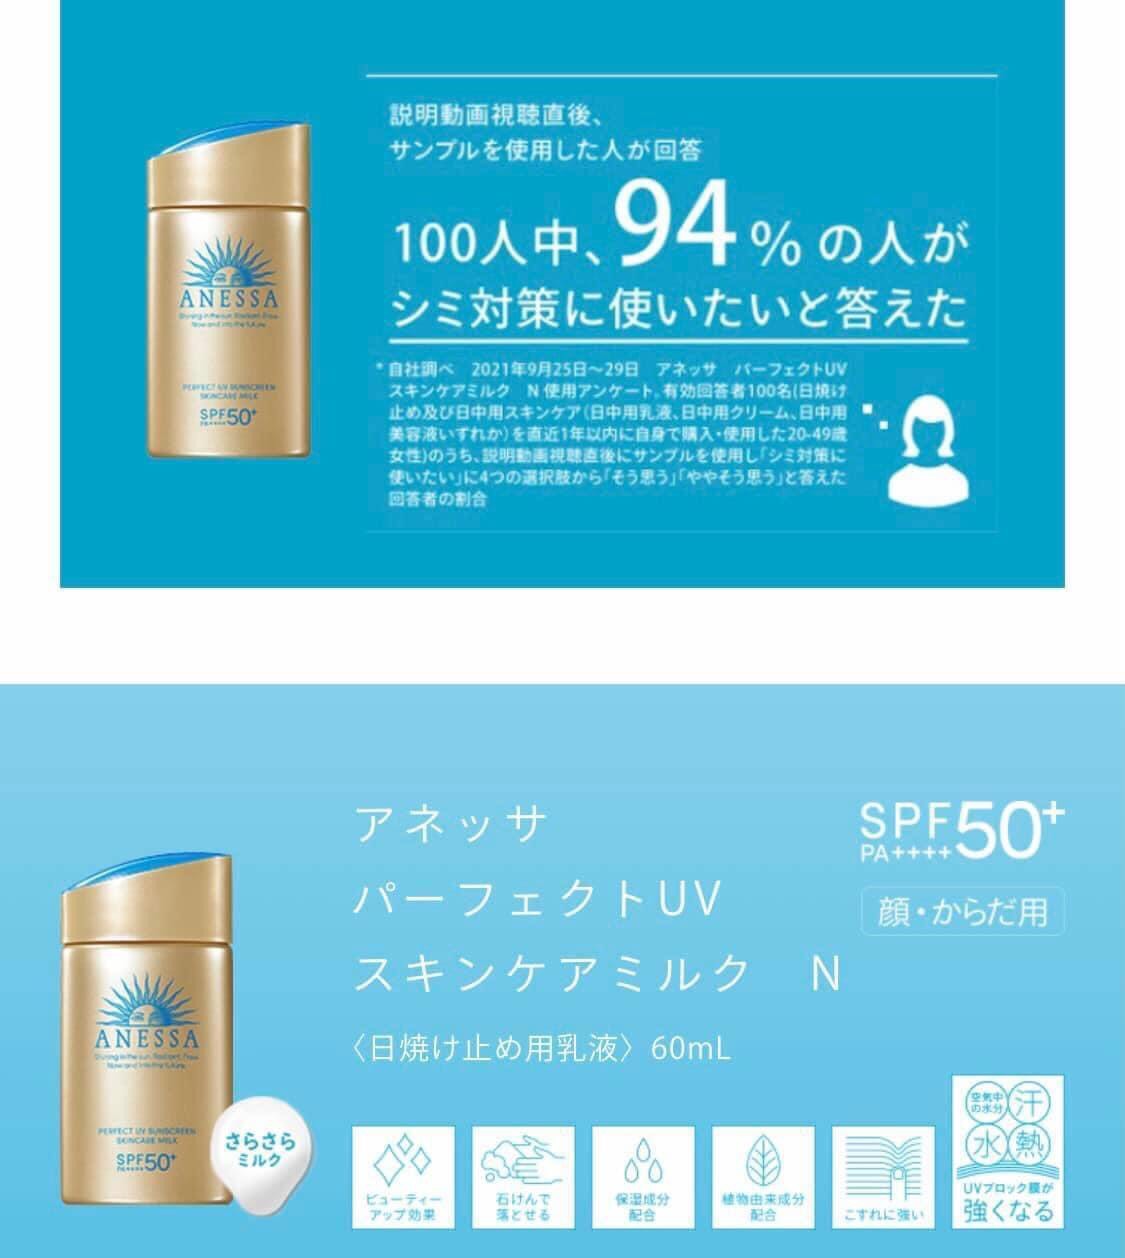 Kem chống nắng ANESSA Shiseido